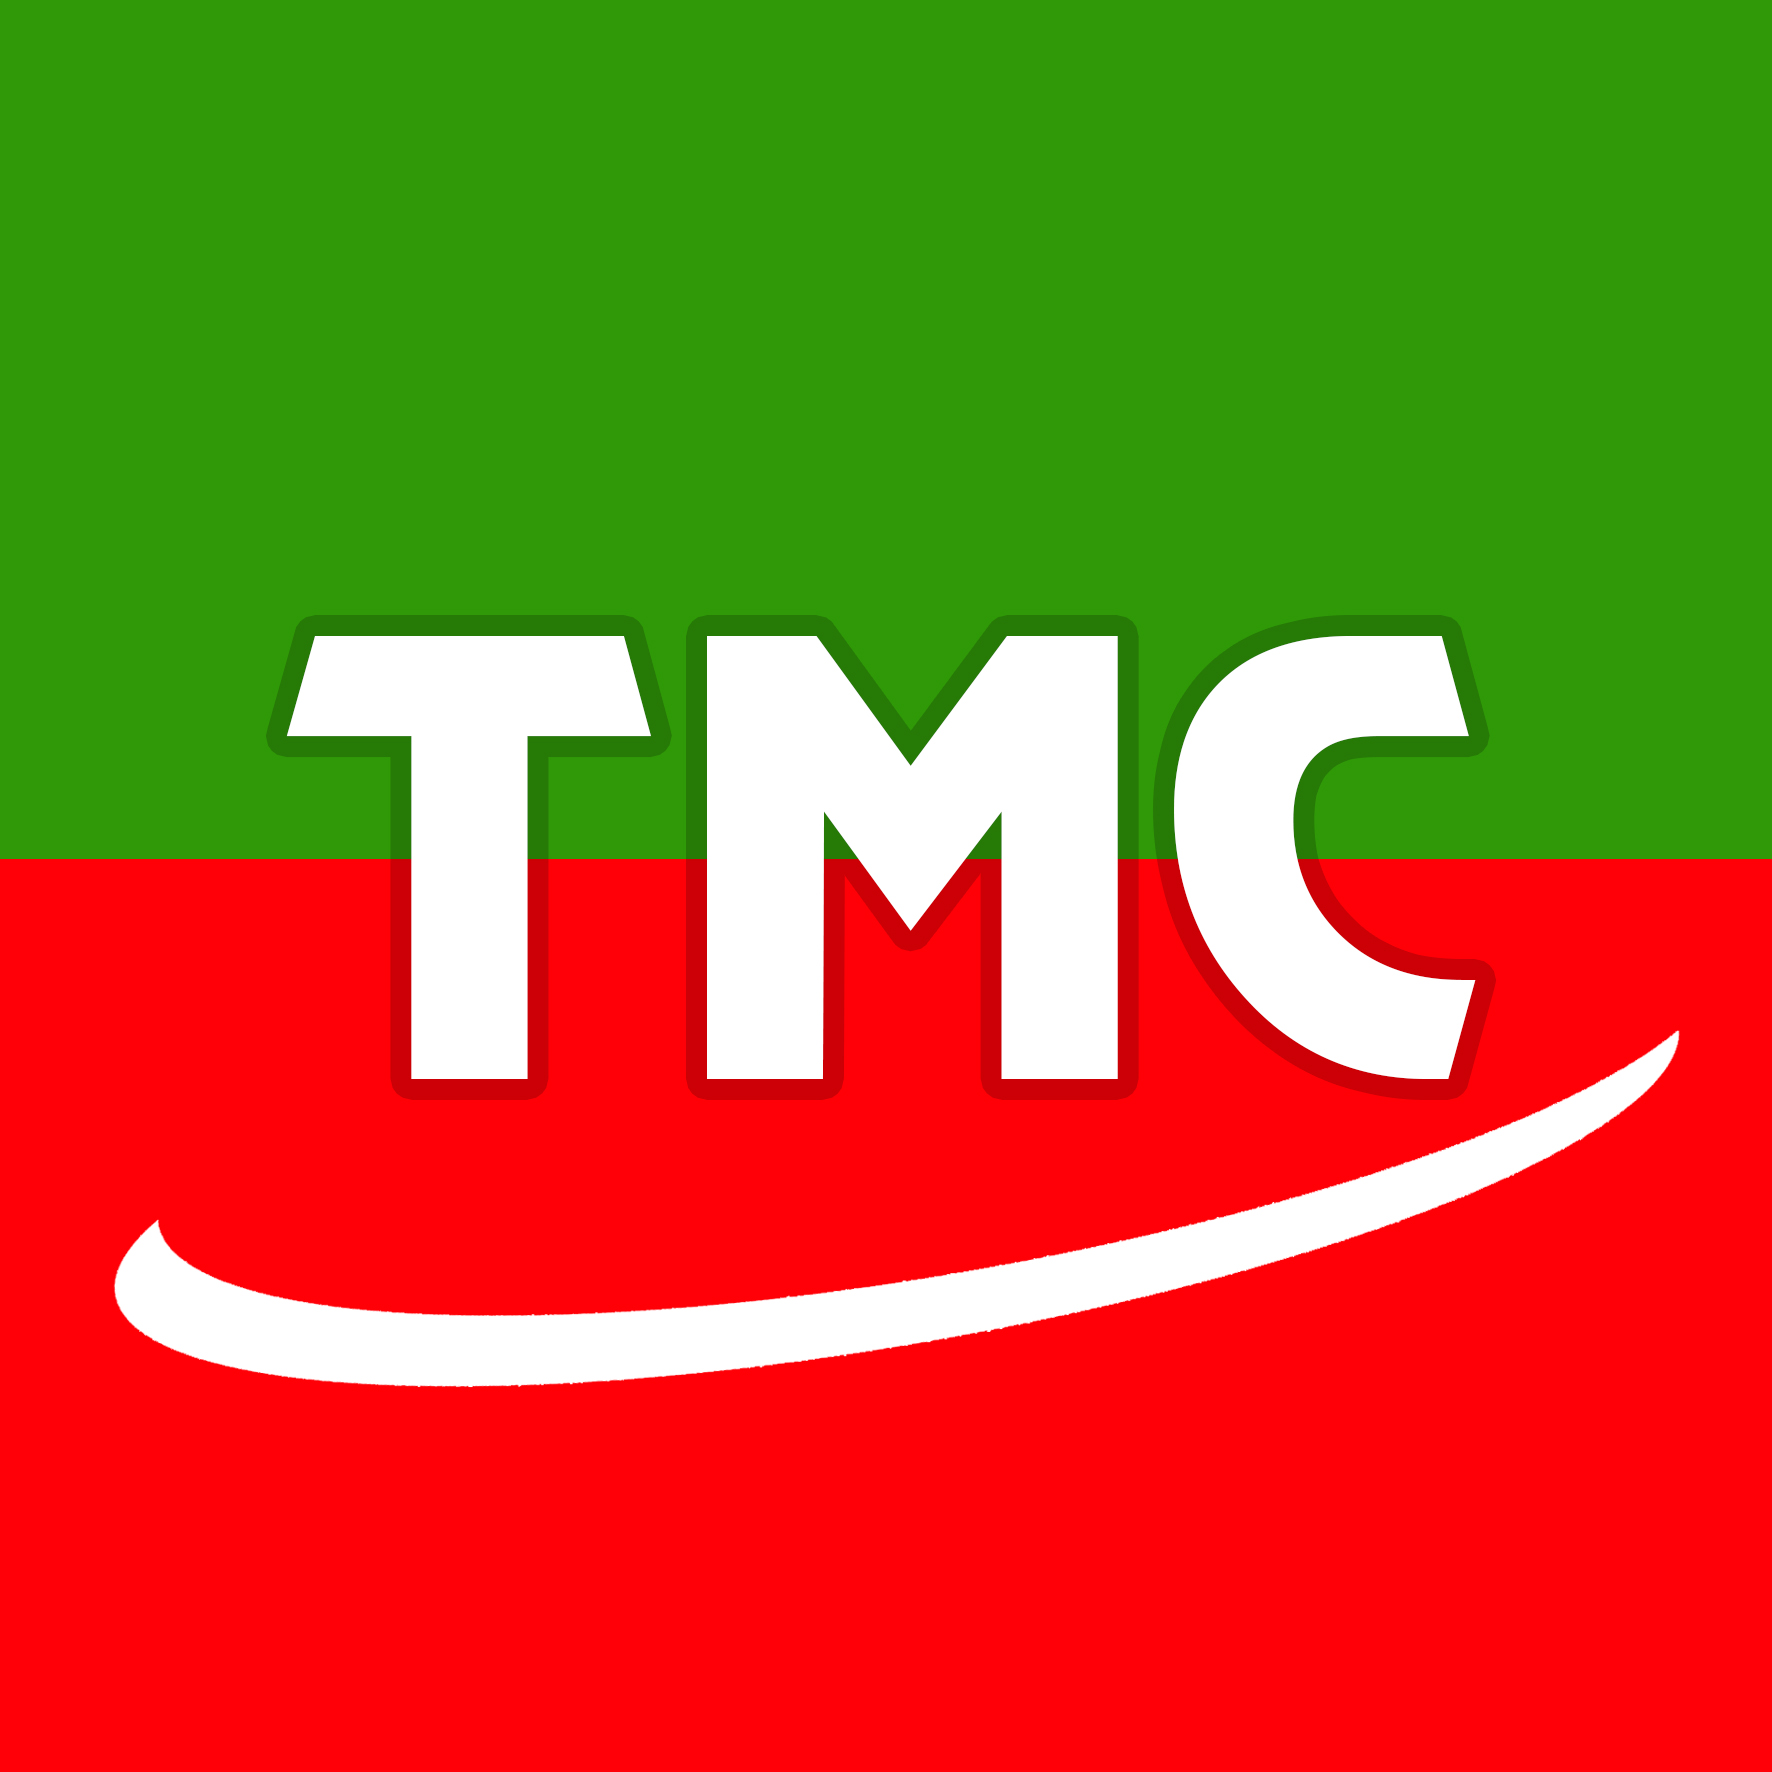 Tuong Minh Craft logo